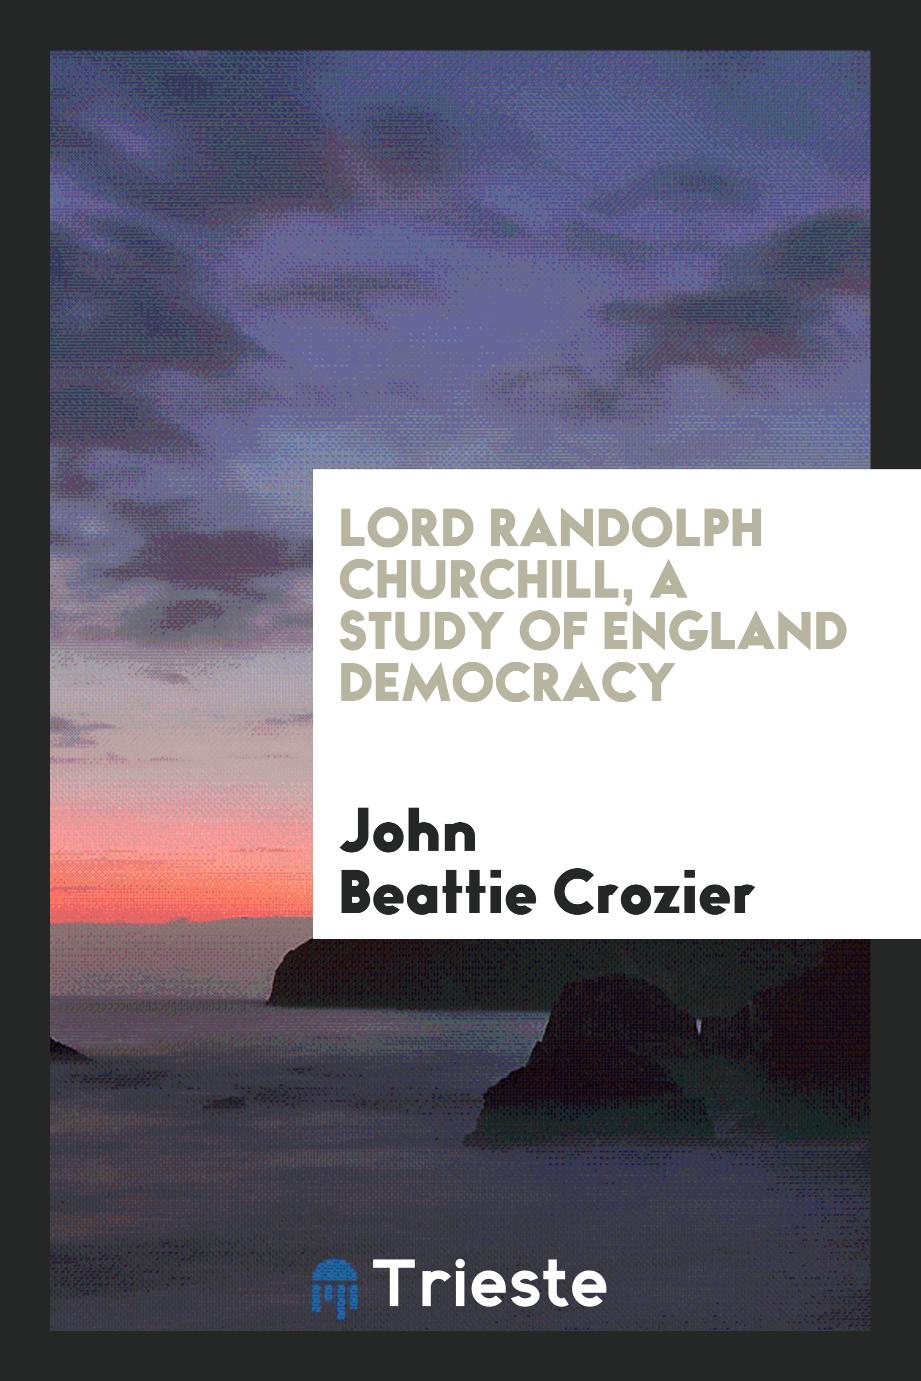 Lord Randolph Churchill, a study of England democracy